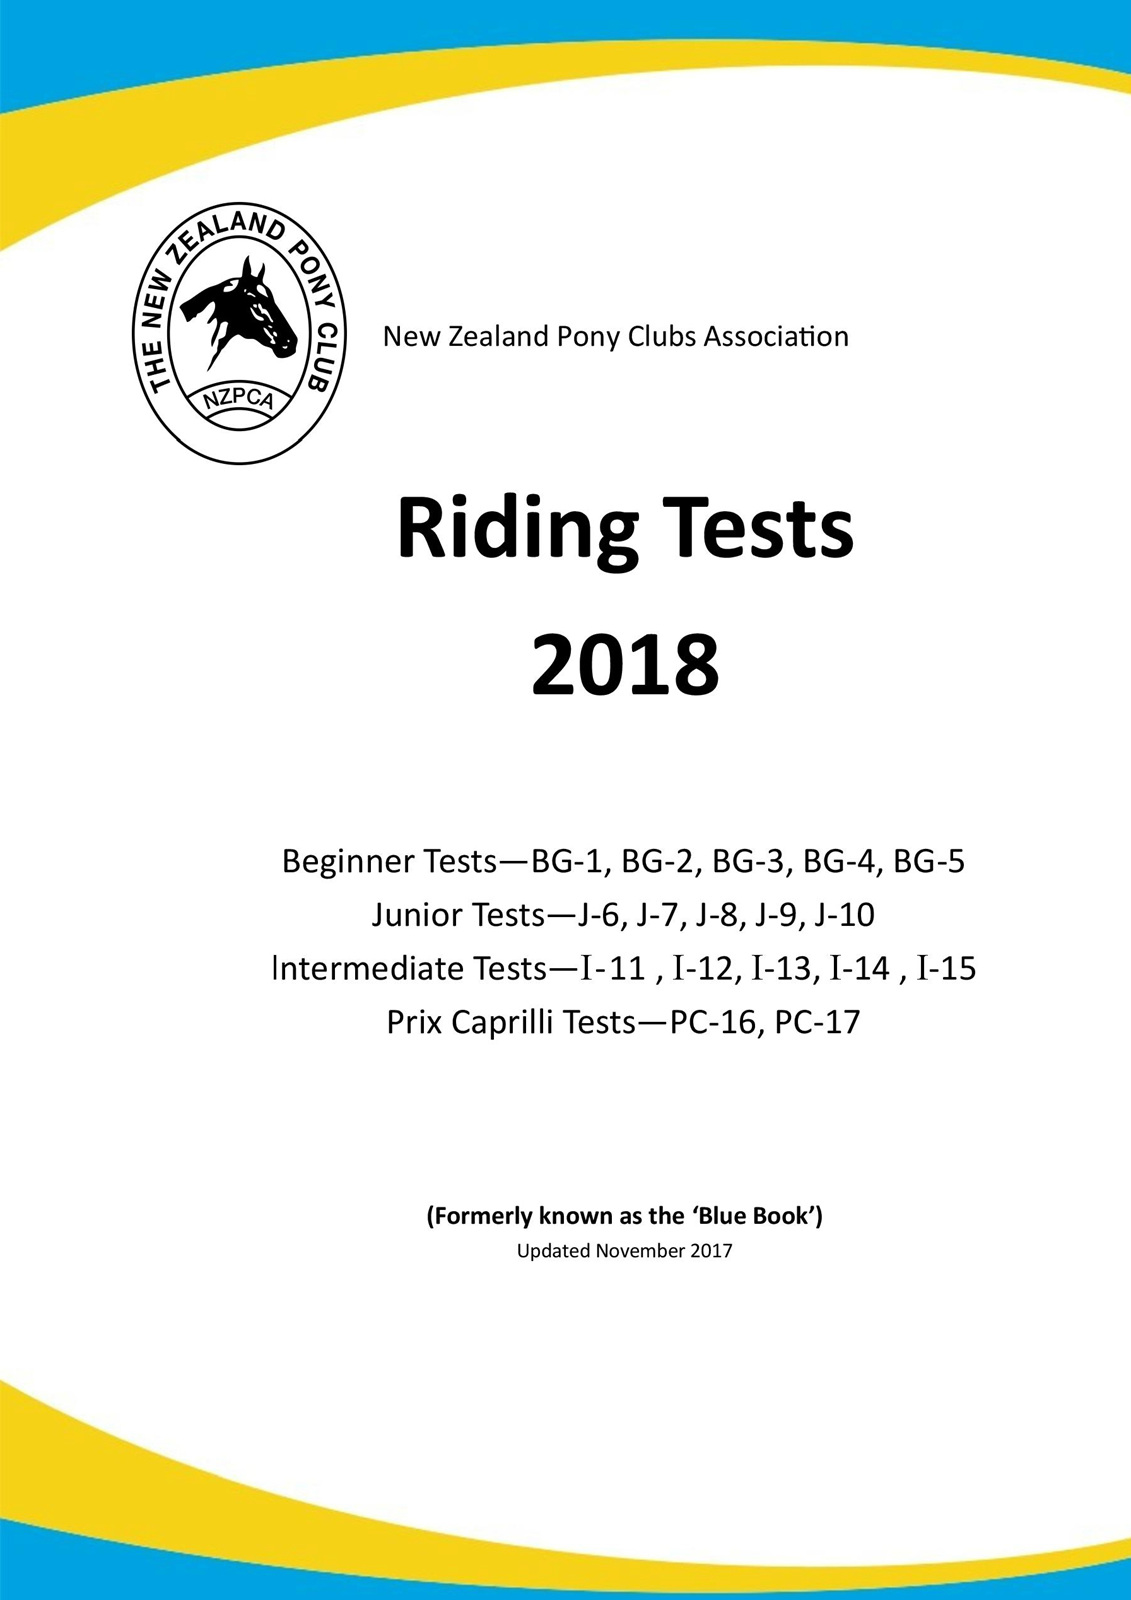 NZ Pony Clubs Association Riding Tests 2018